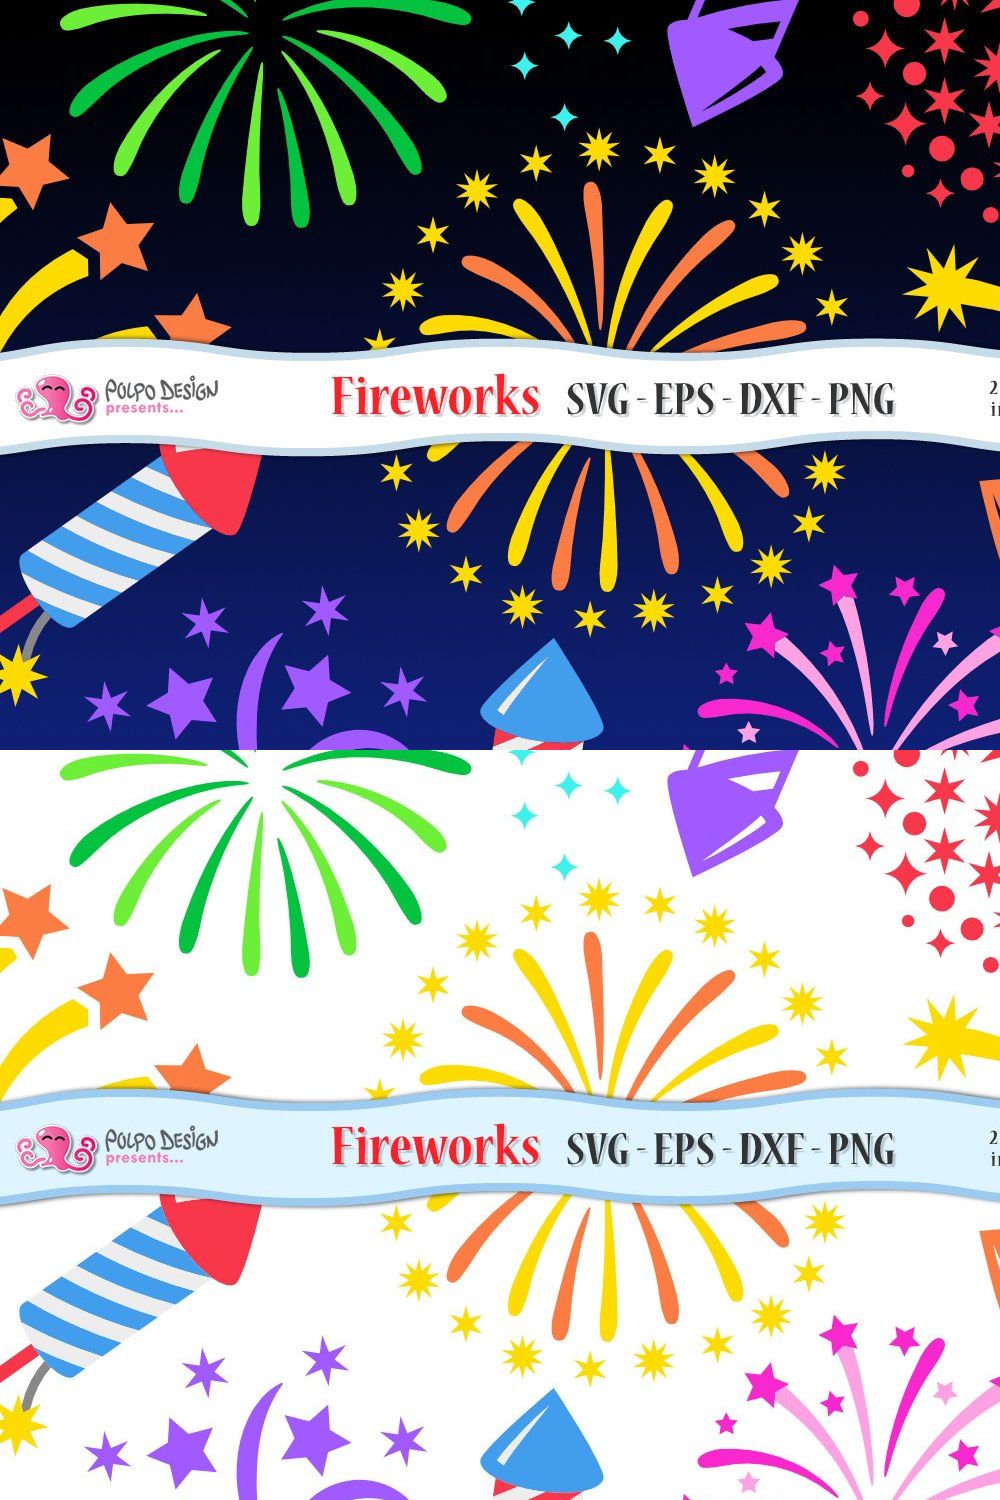 Fireworks SVG, Eps, Dxf, Png pinterest preview image.